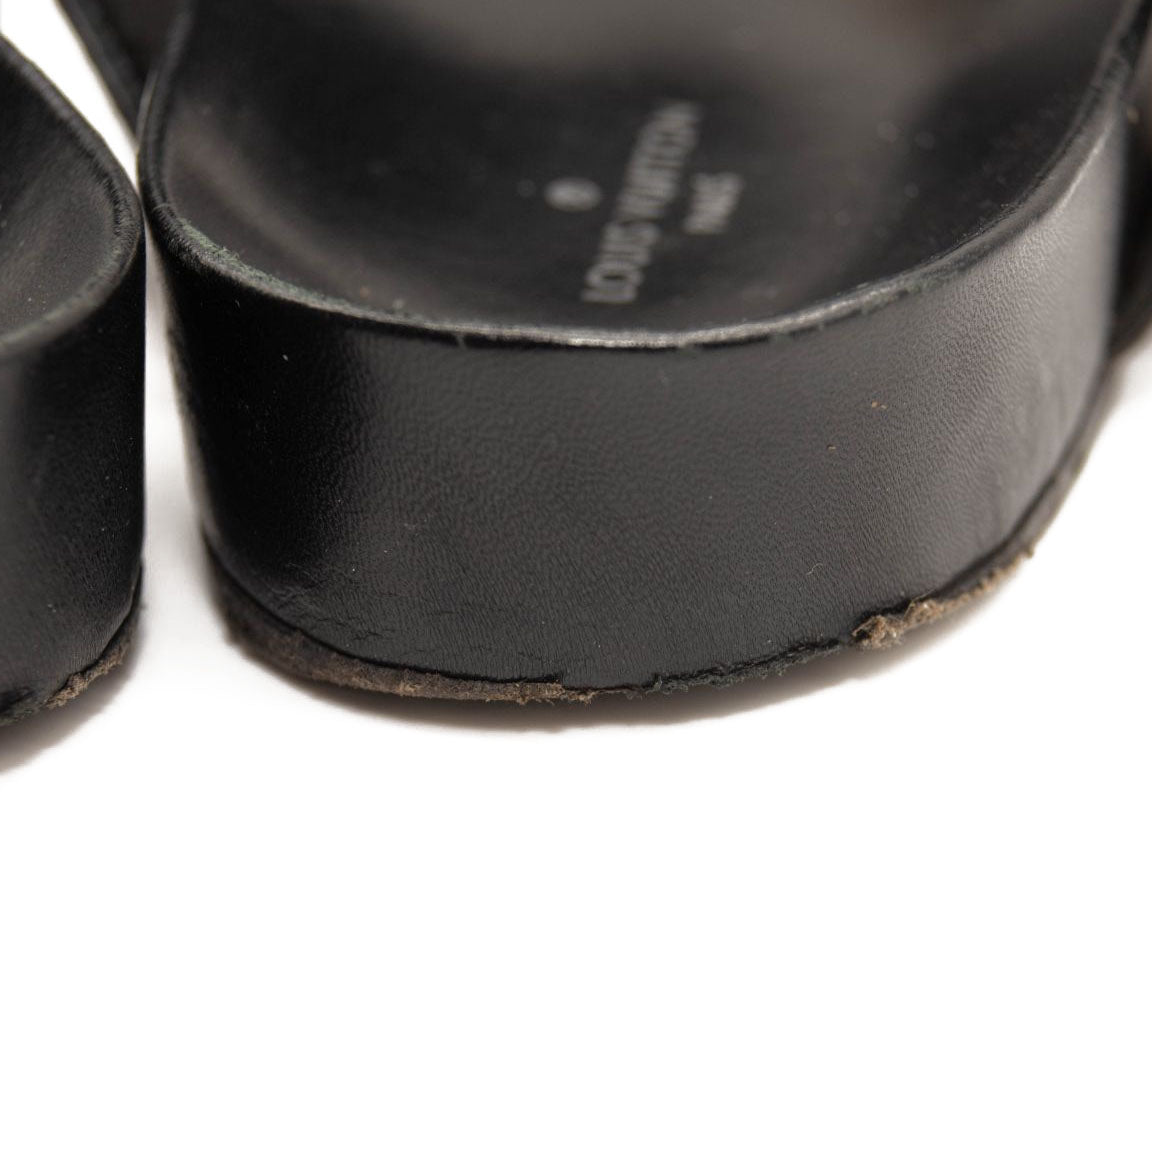 Bom dia leather sandal Louis Vuitton Black size 39.5 EU in Leather